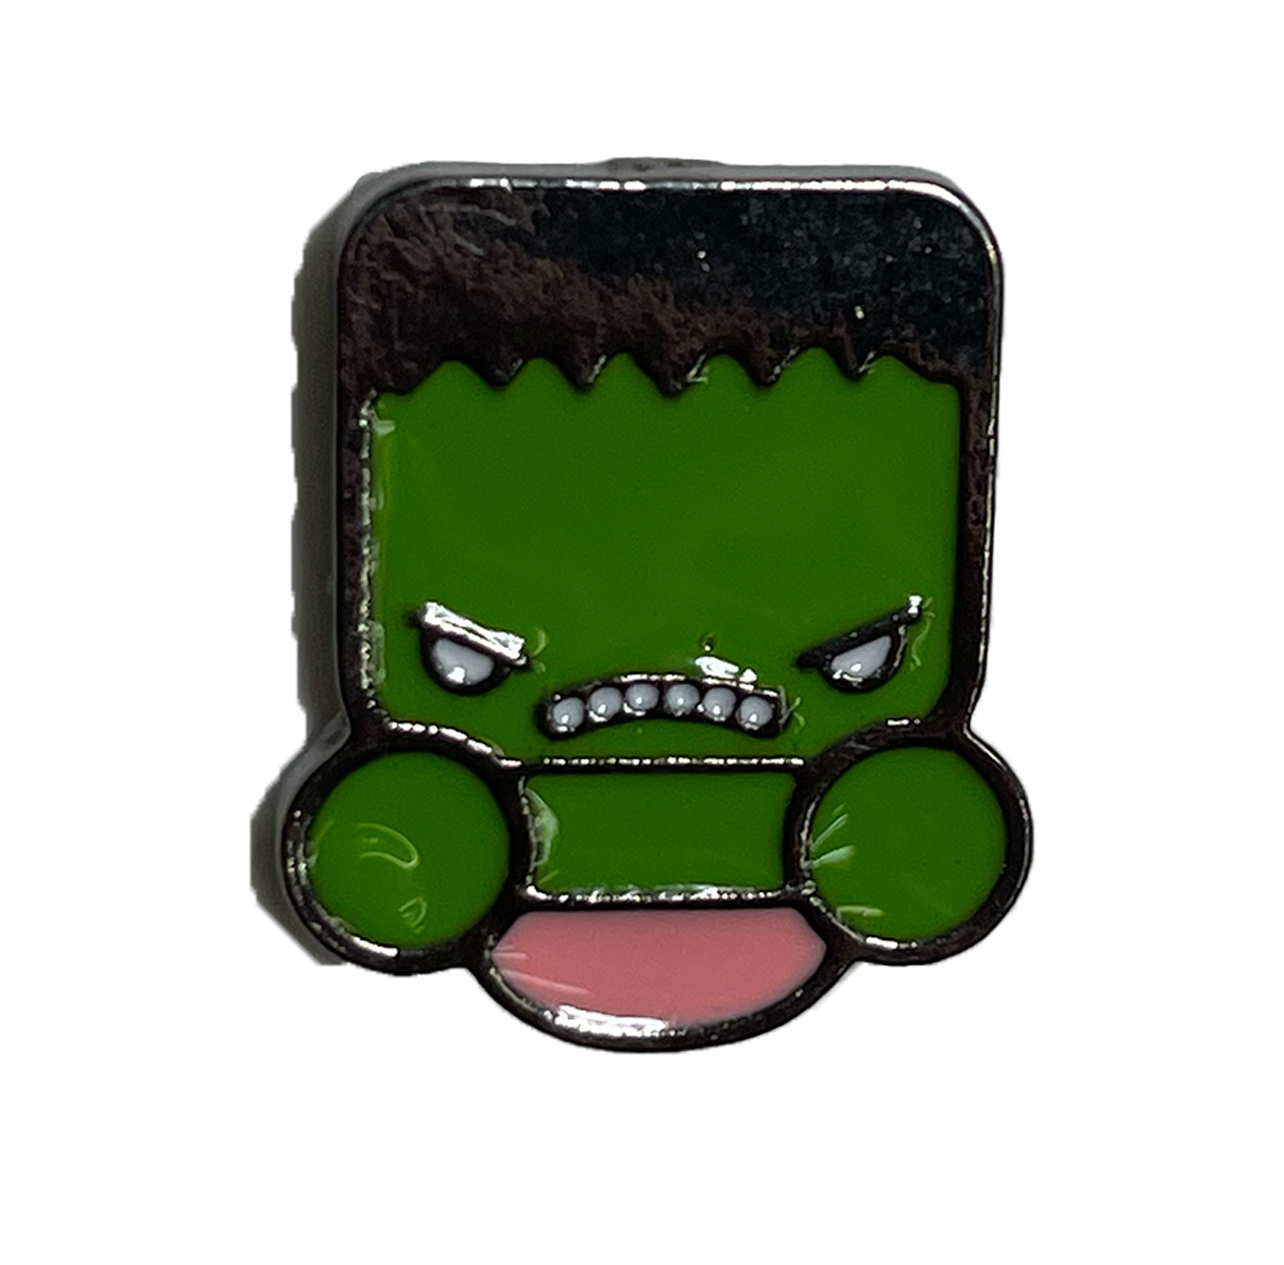 Hulk Pin